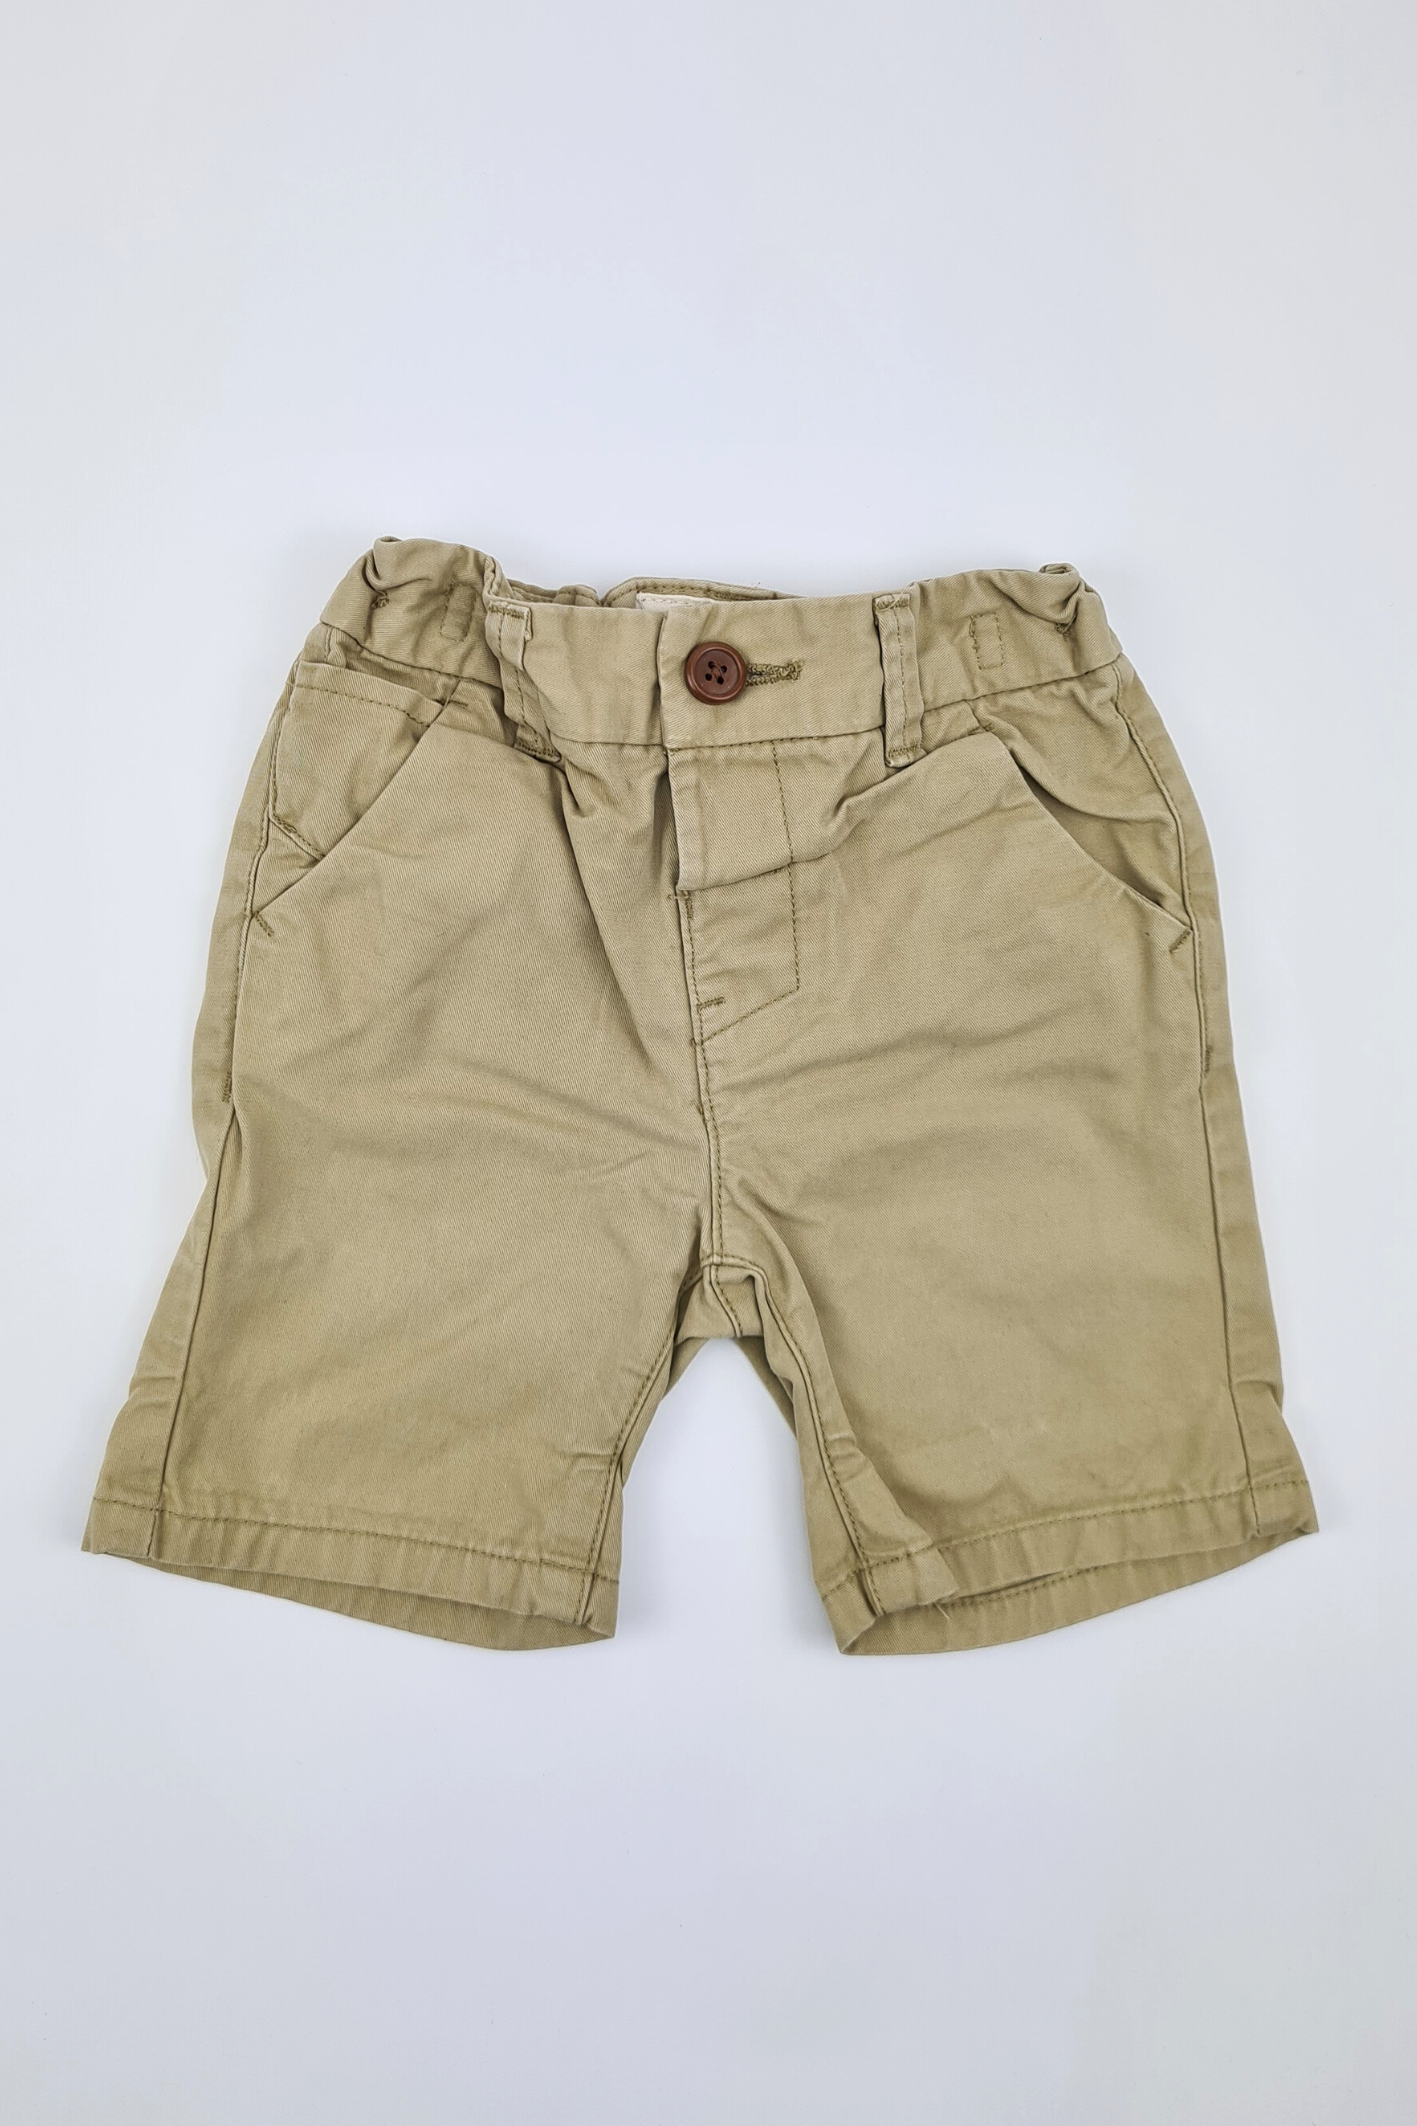 9-12m - Beige Chino Shorts (Next)